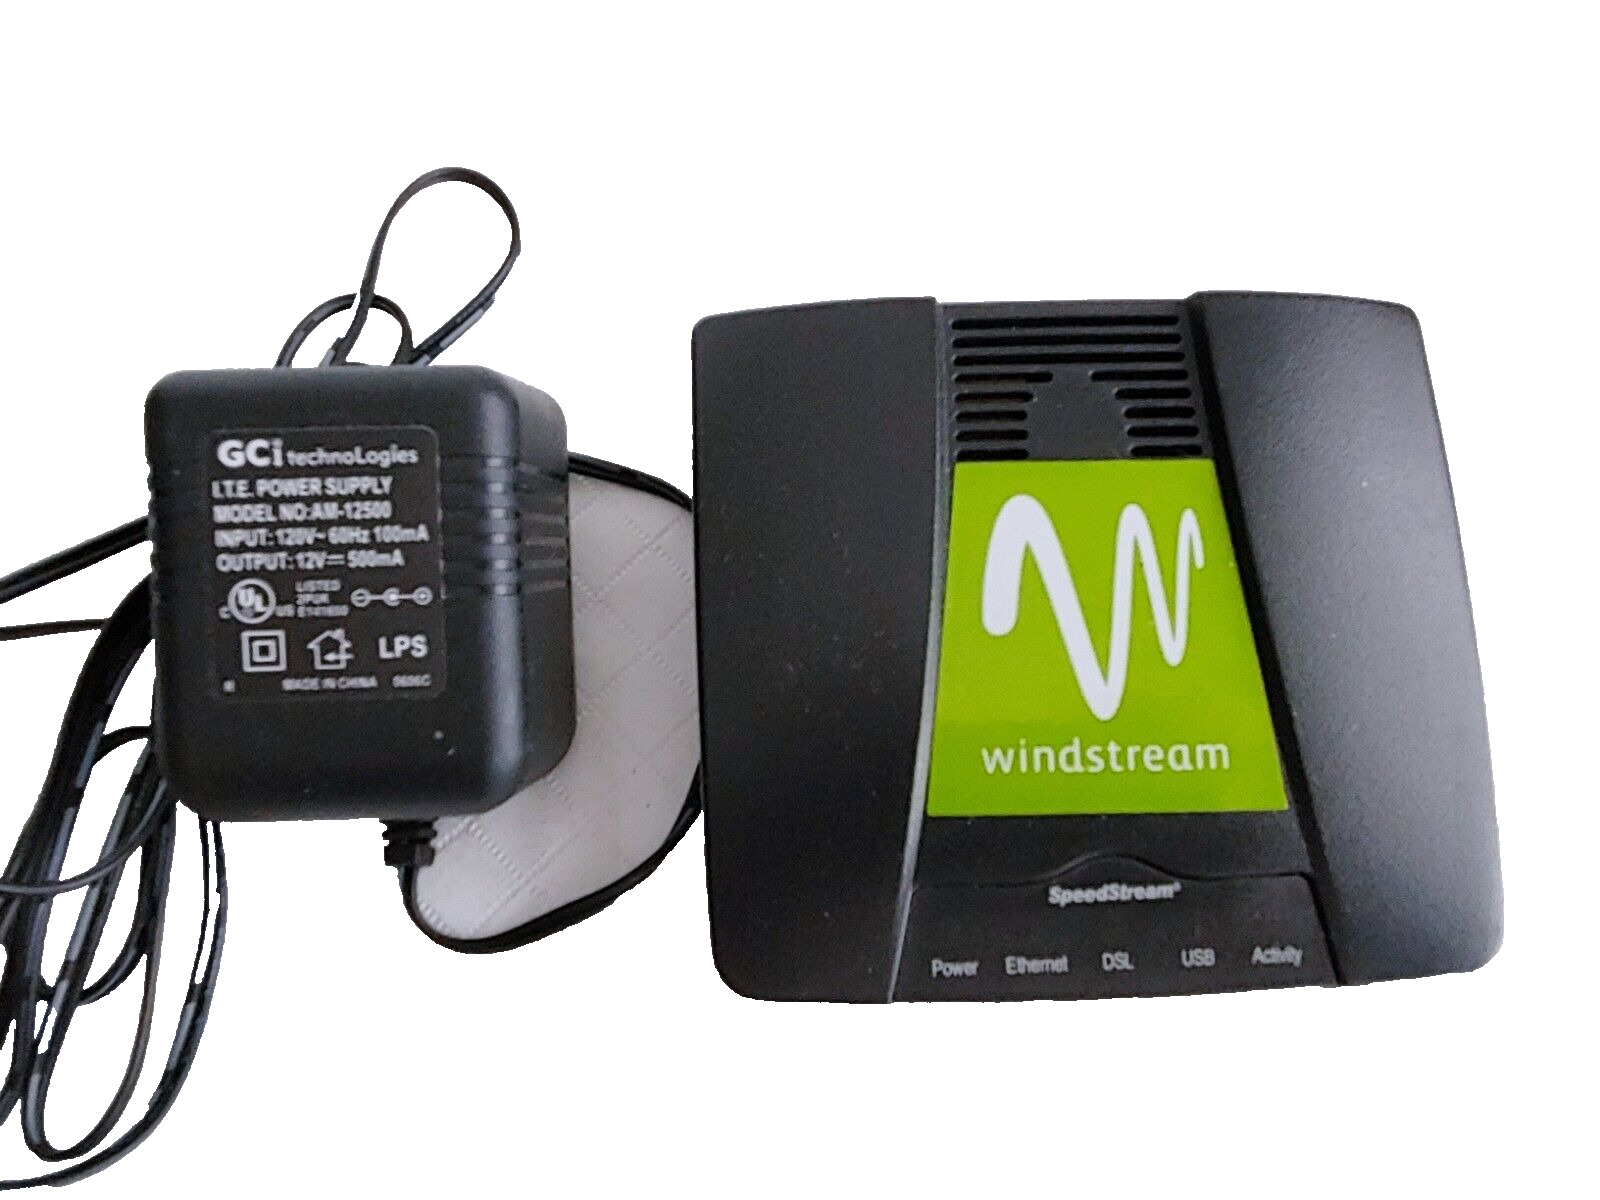 SIEMENS Windstream Speedstream 4200 Multi VC DSL Modem + AC Adapter #21718